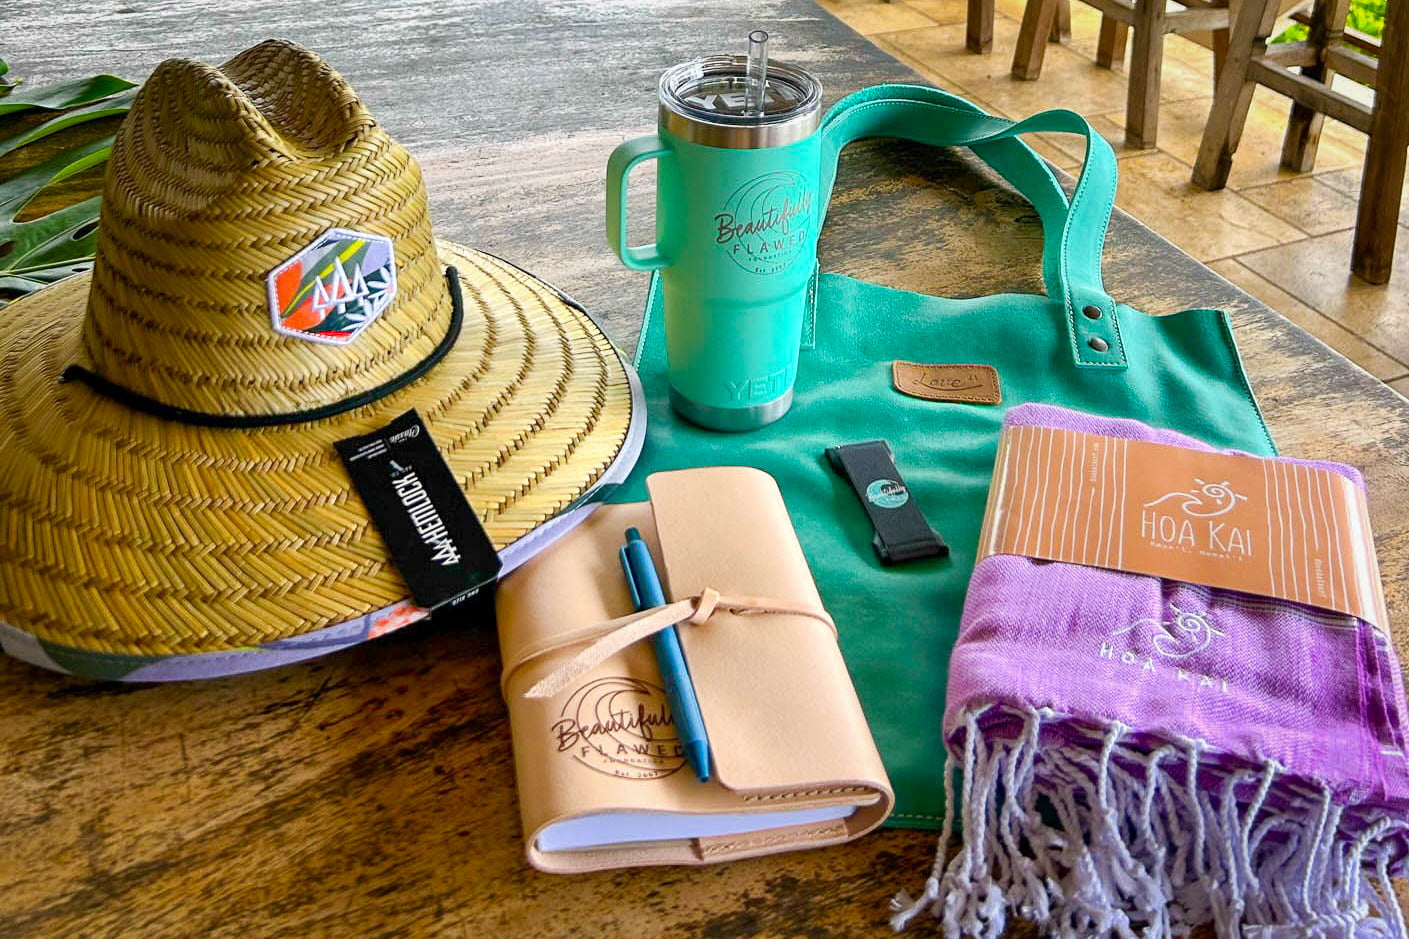 Gift Bag items from Hemlock Hat Co., Rustico, YETI, Love 41, LoveHandle, and Hoa Kai Surf